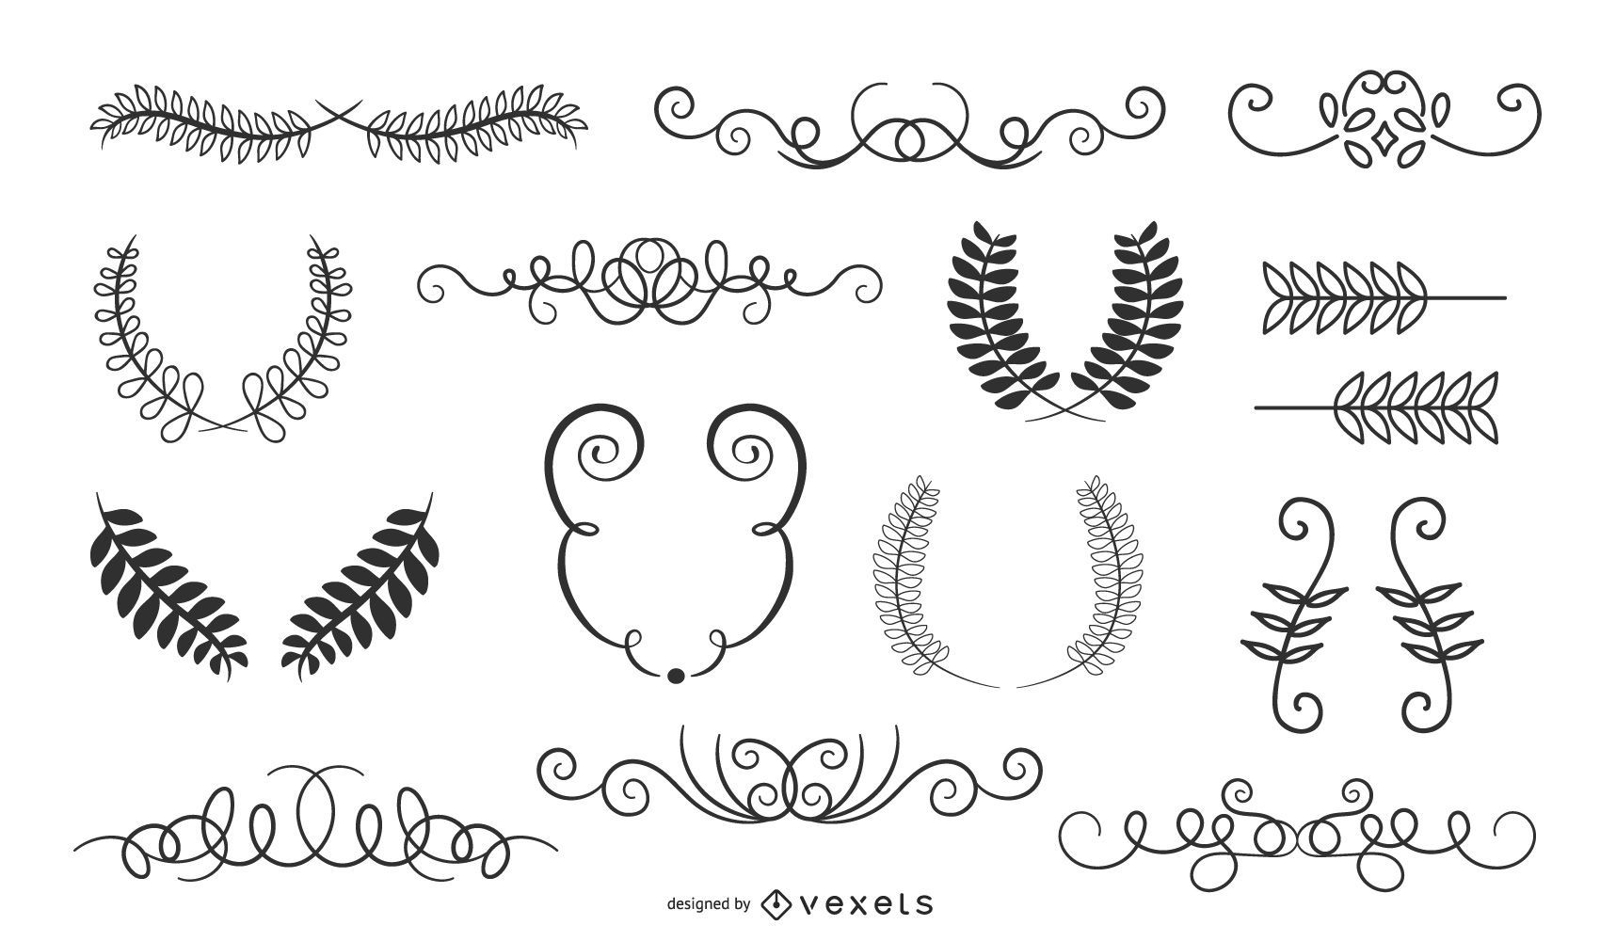 Ornamente Vektorgrafiken zum Download